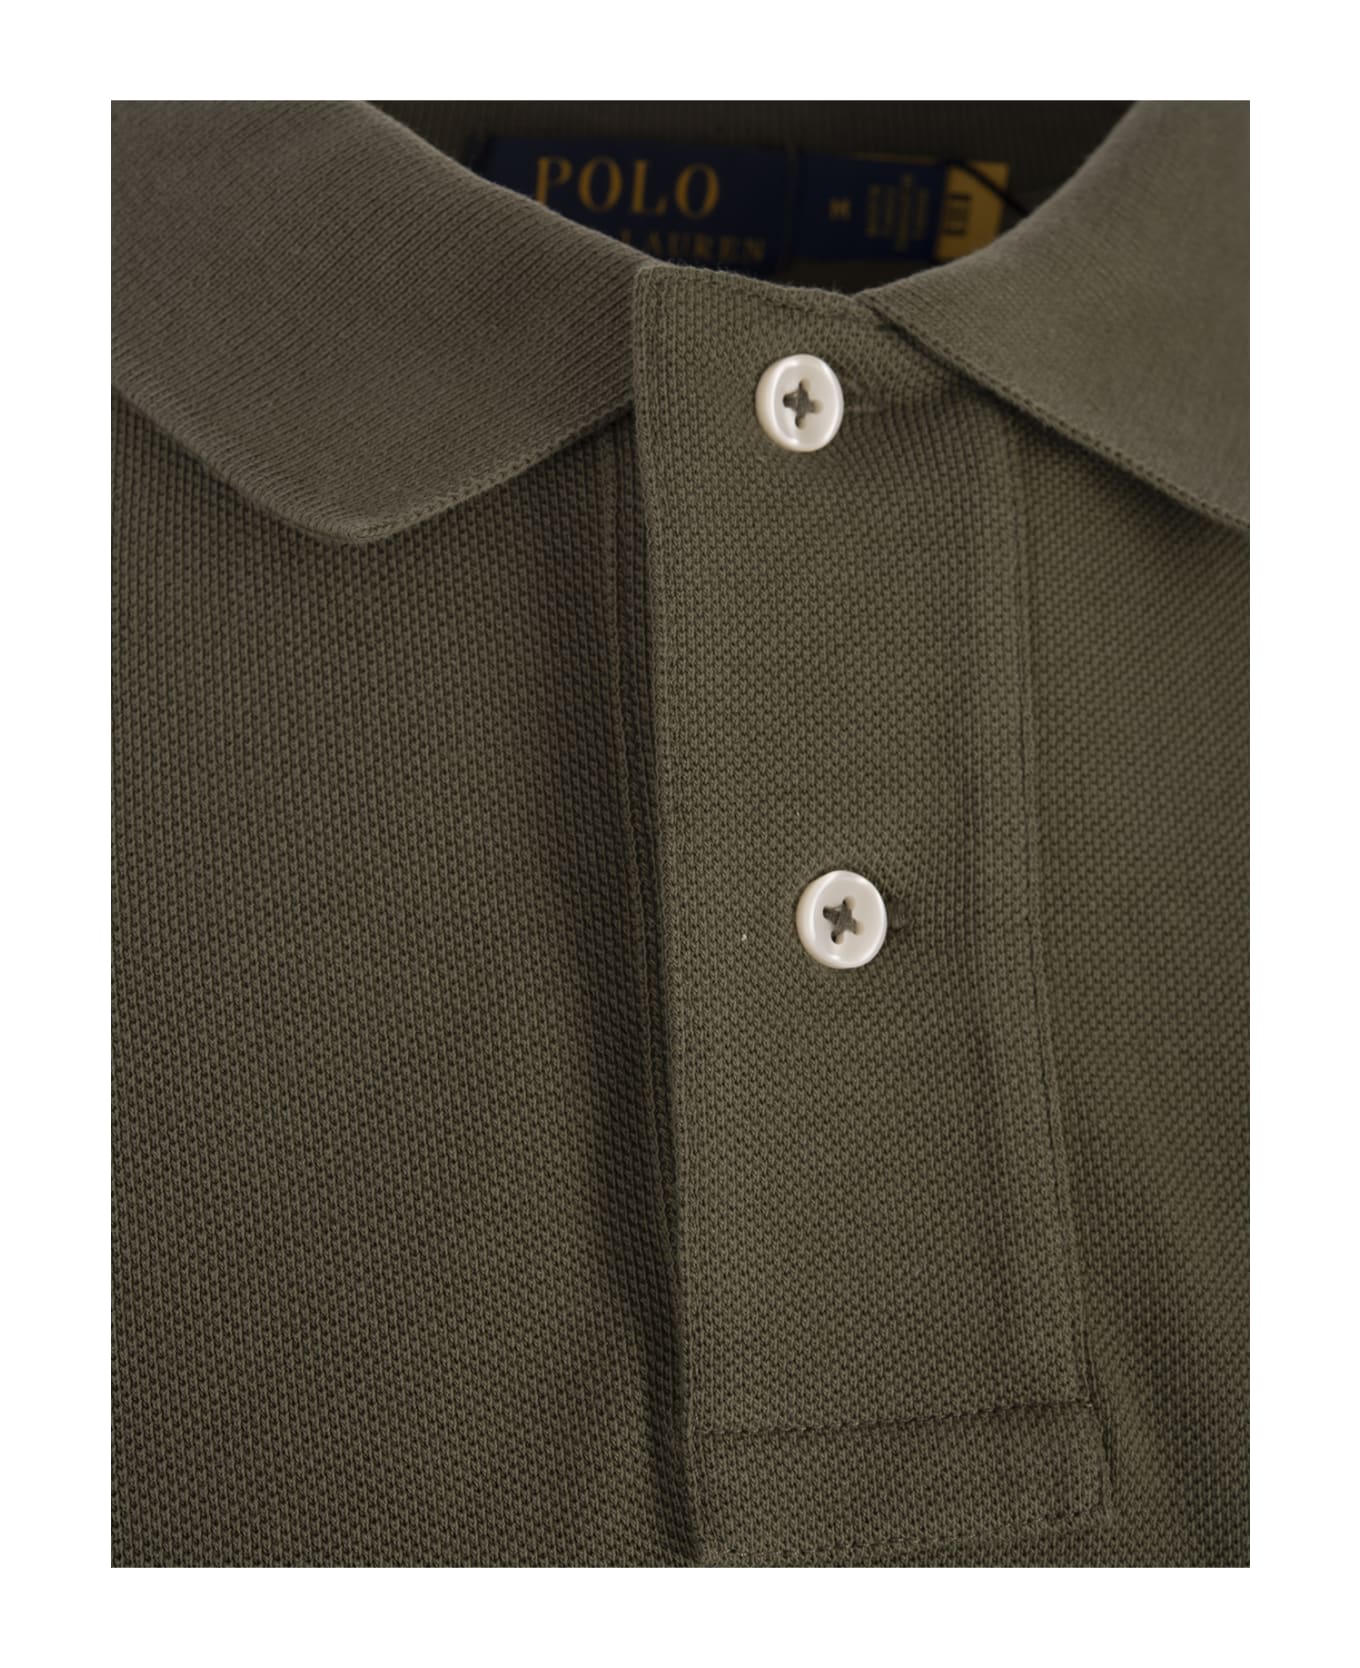 Ralph Lauren Slim-fit Polo Shirt In Military Green Piqué - Green